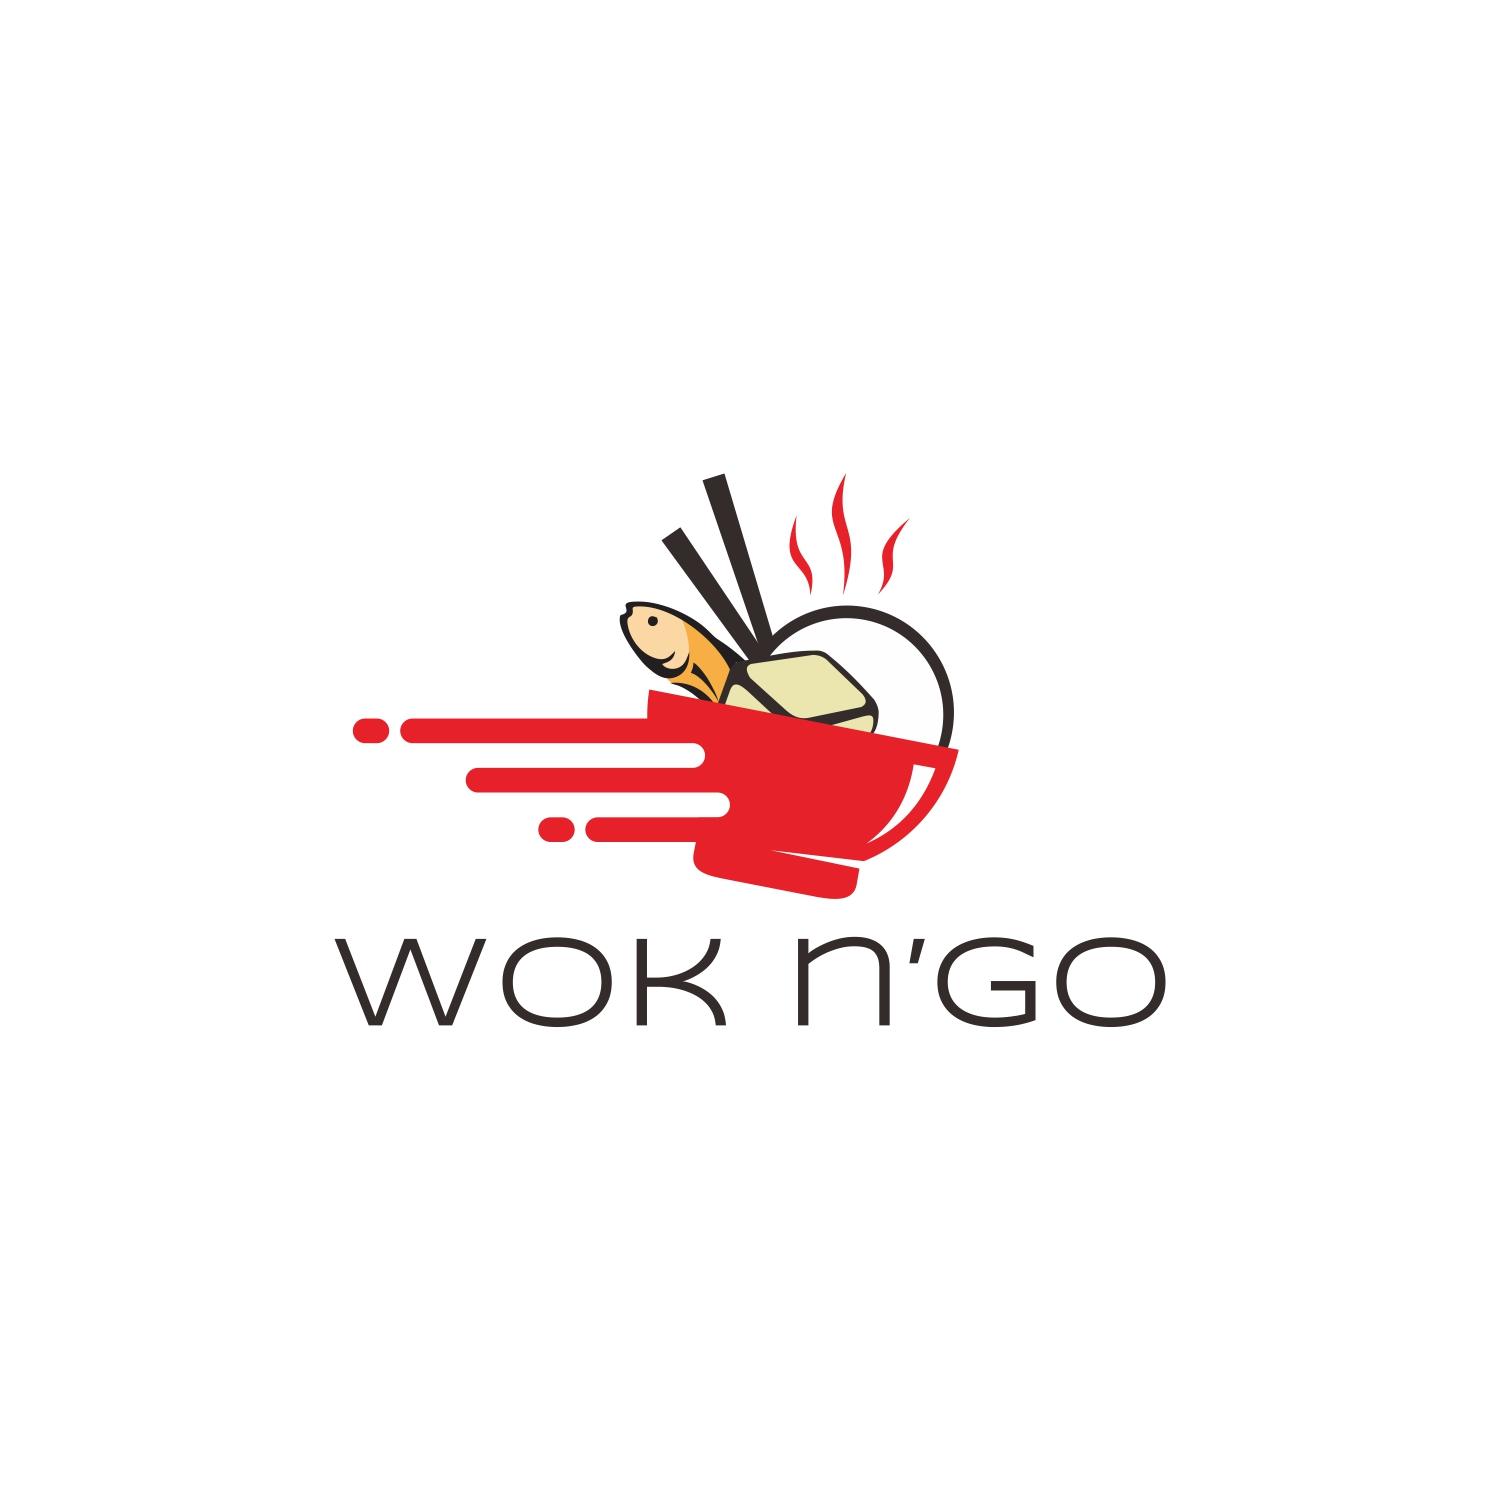 Go Food Logo - Modern, Playful, Fast Food Restaurant Logo Design for Wok n'go